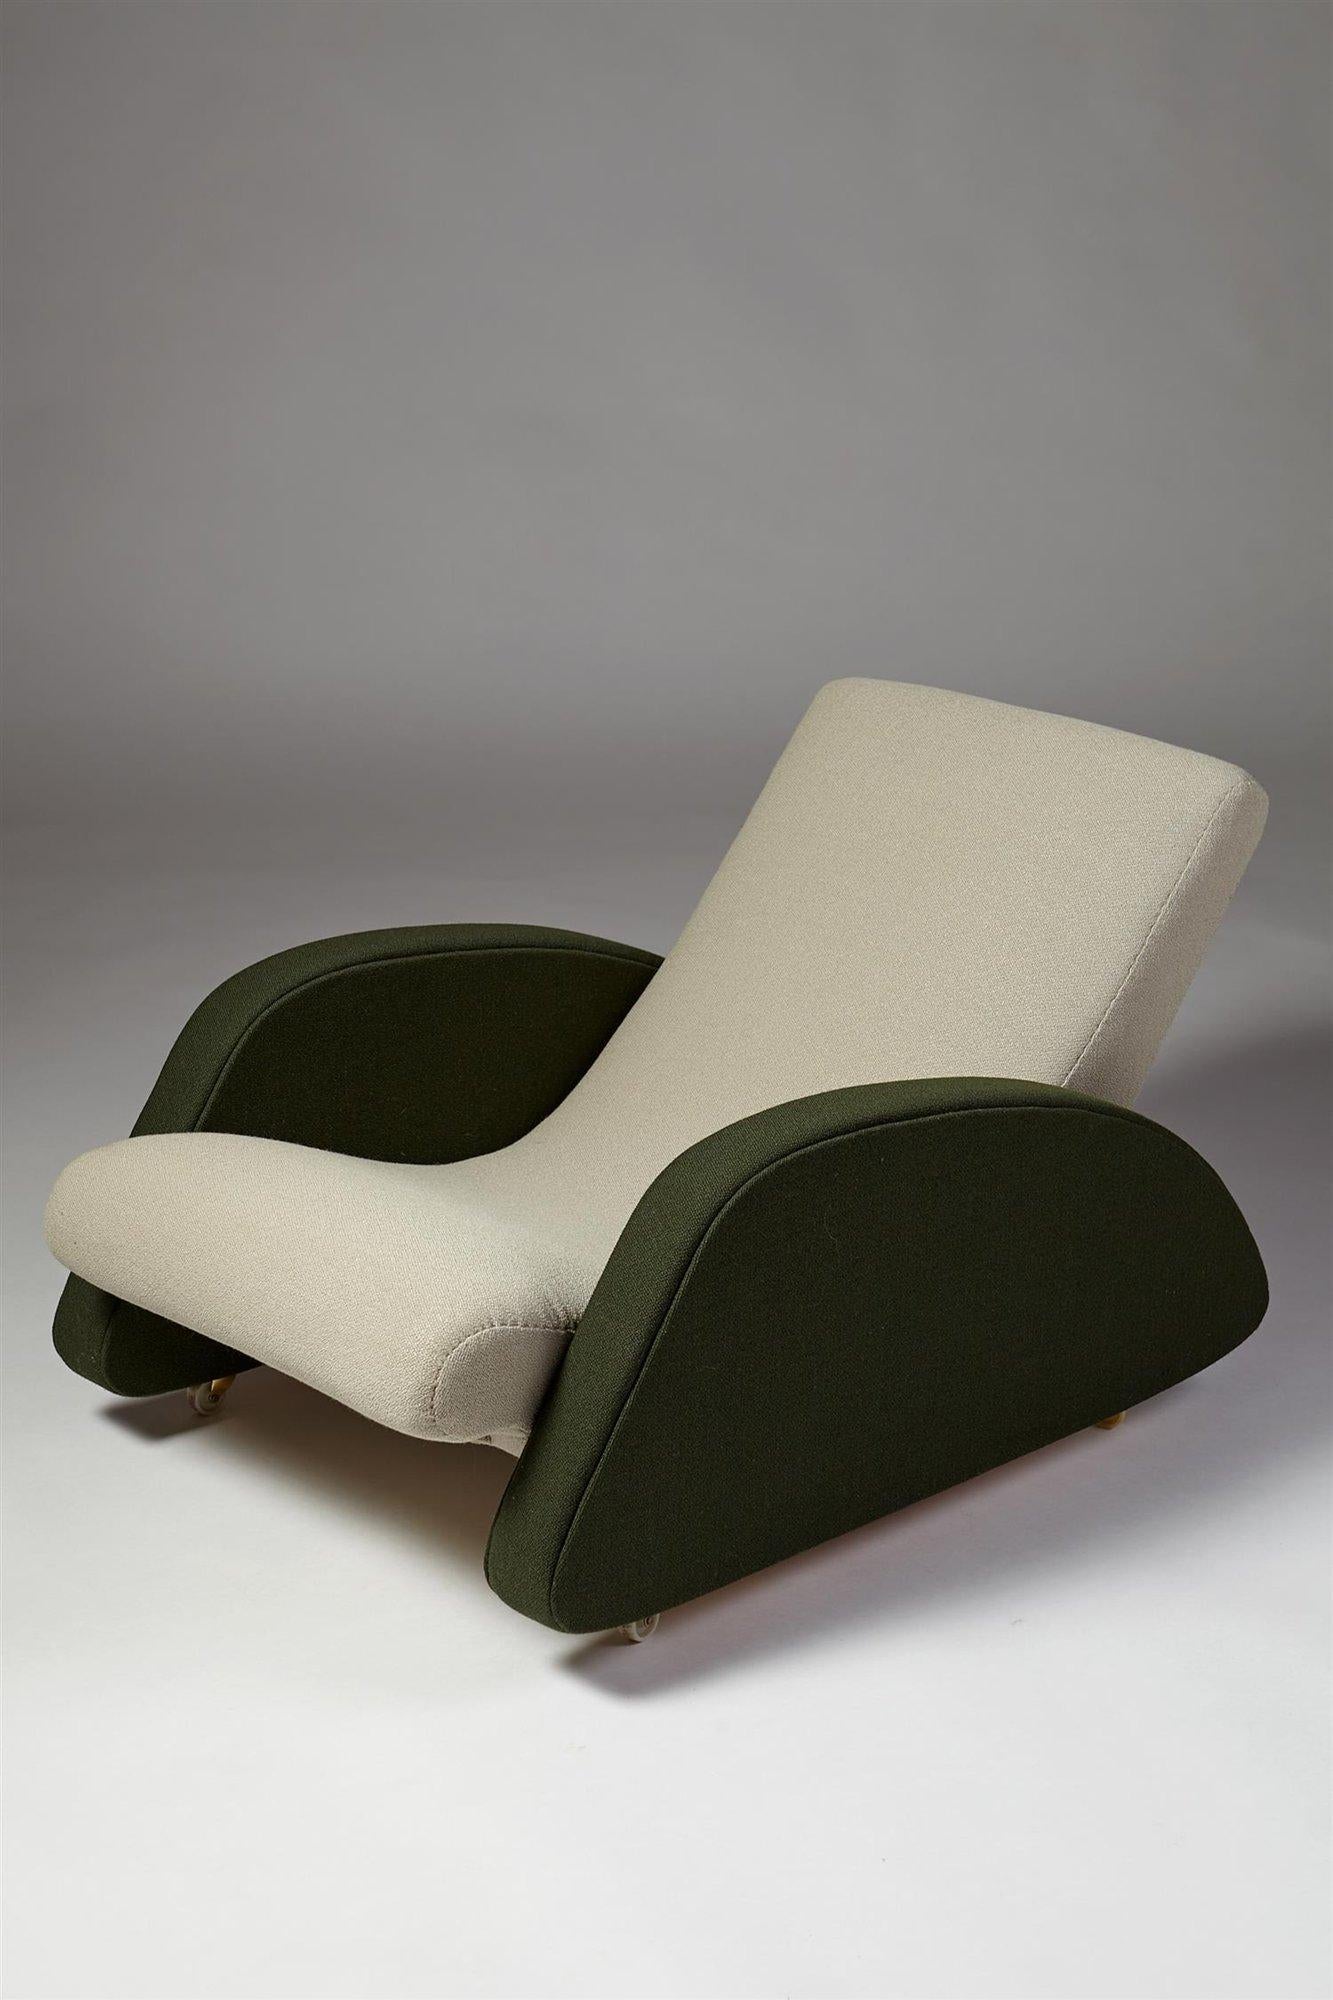 Armchair designed by Bo Wretling for Otto Wretling, Sweden, 1930s.
Wool upholstery.